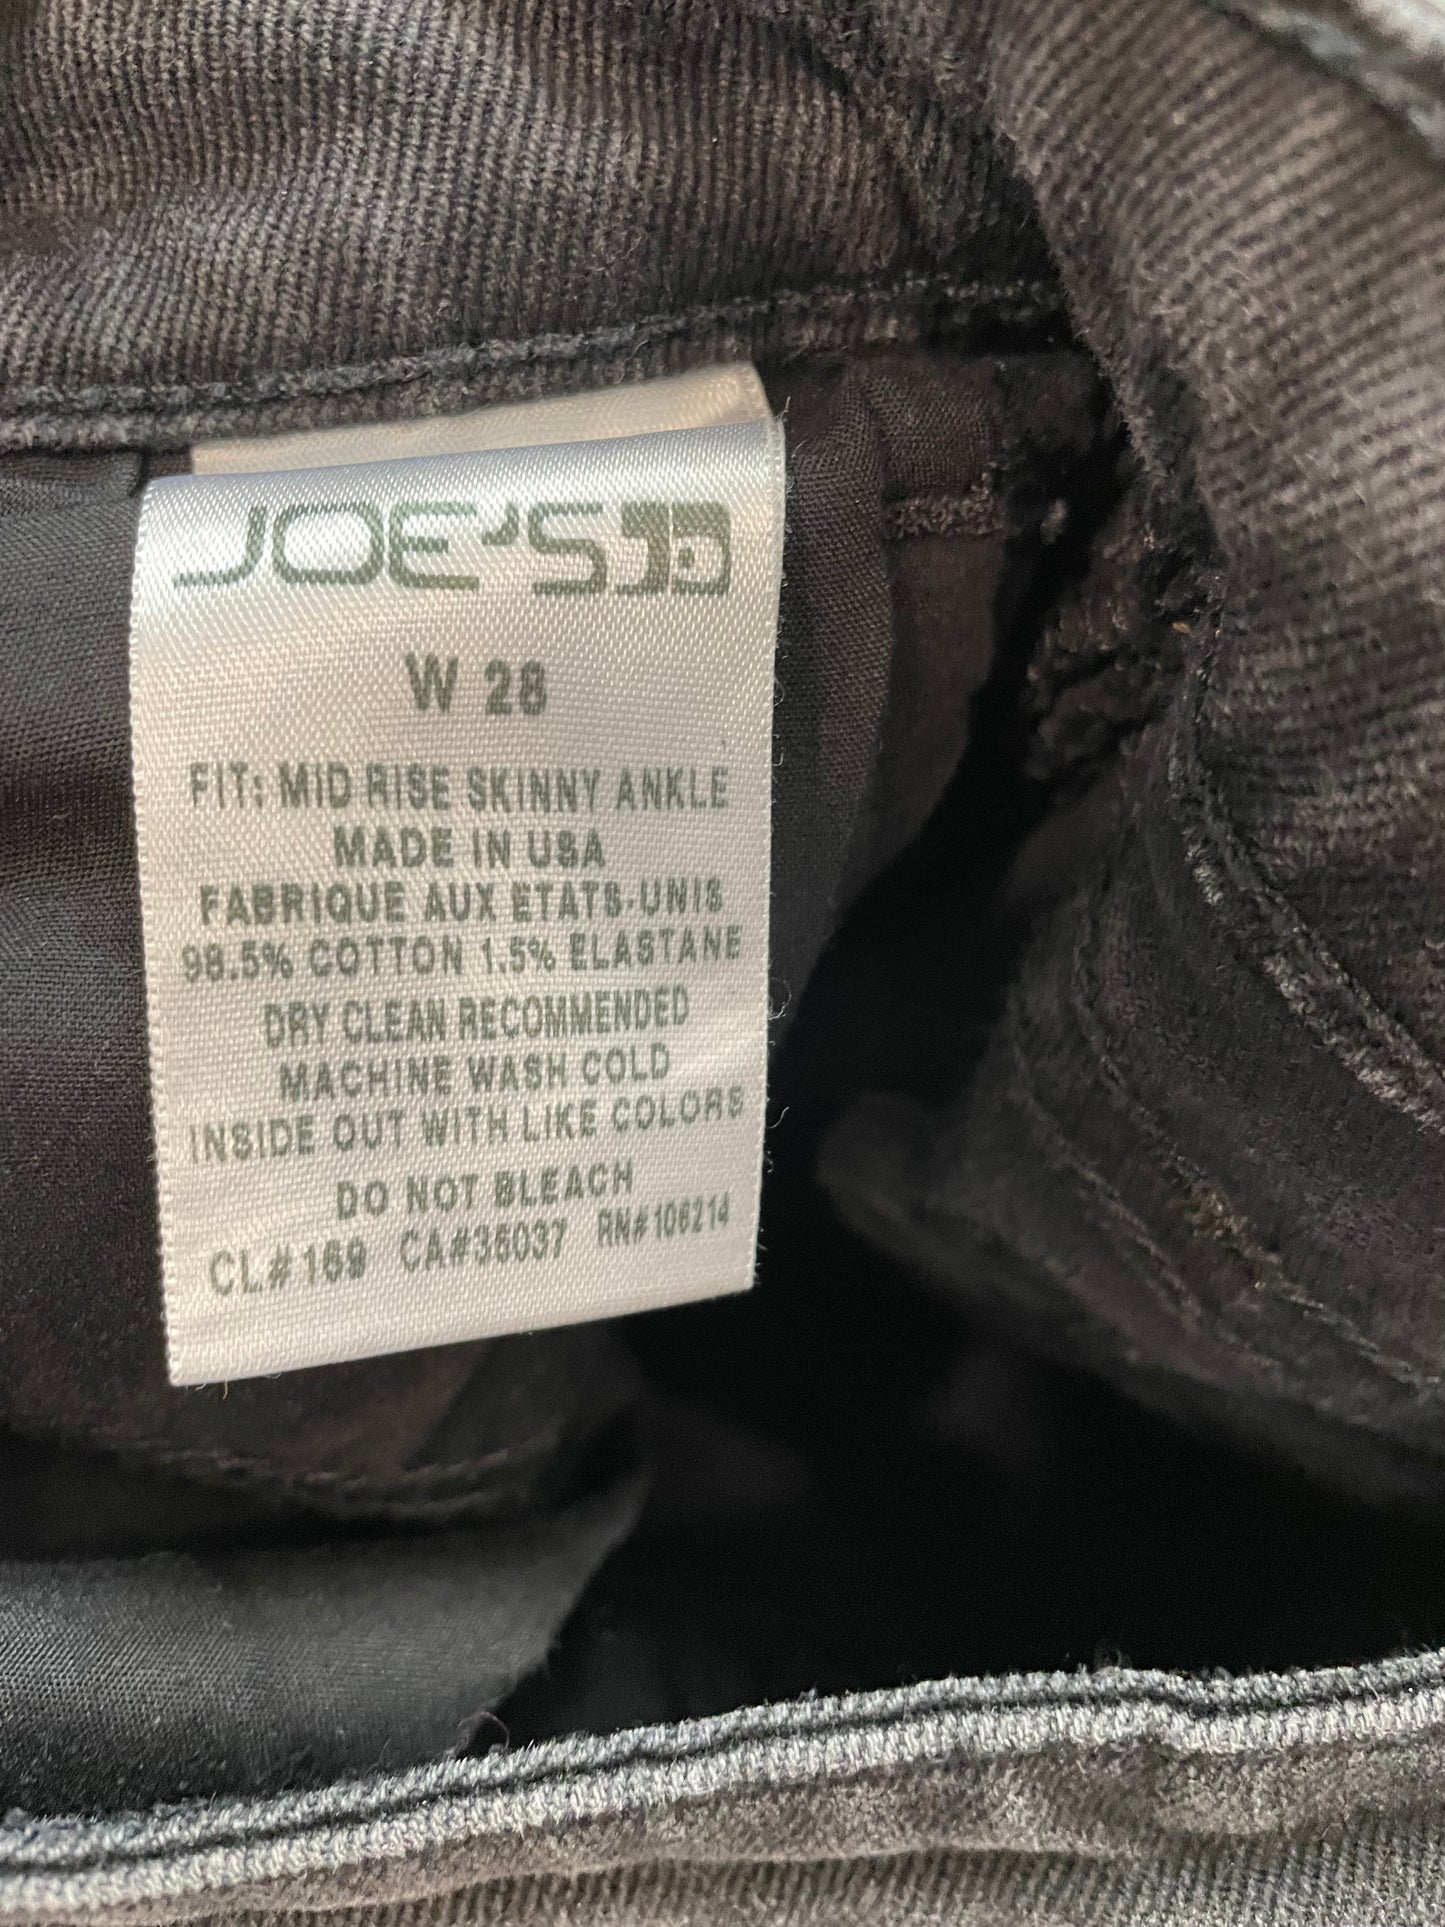 Joe's Mid-Rise Skinny Ankle Black Jeans (28)